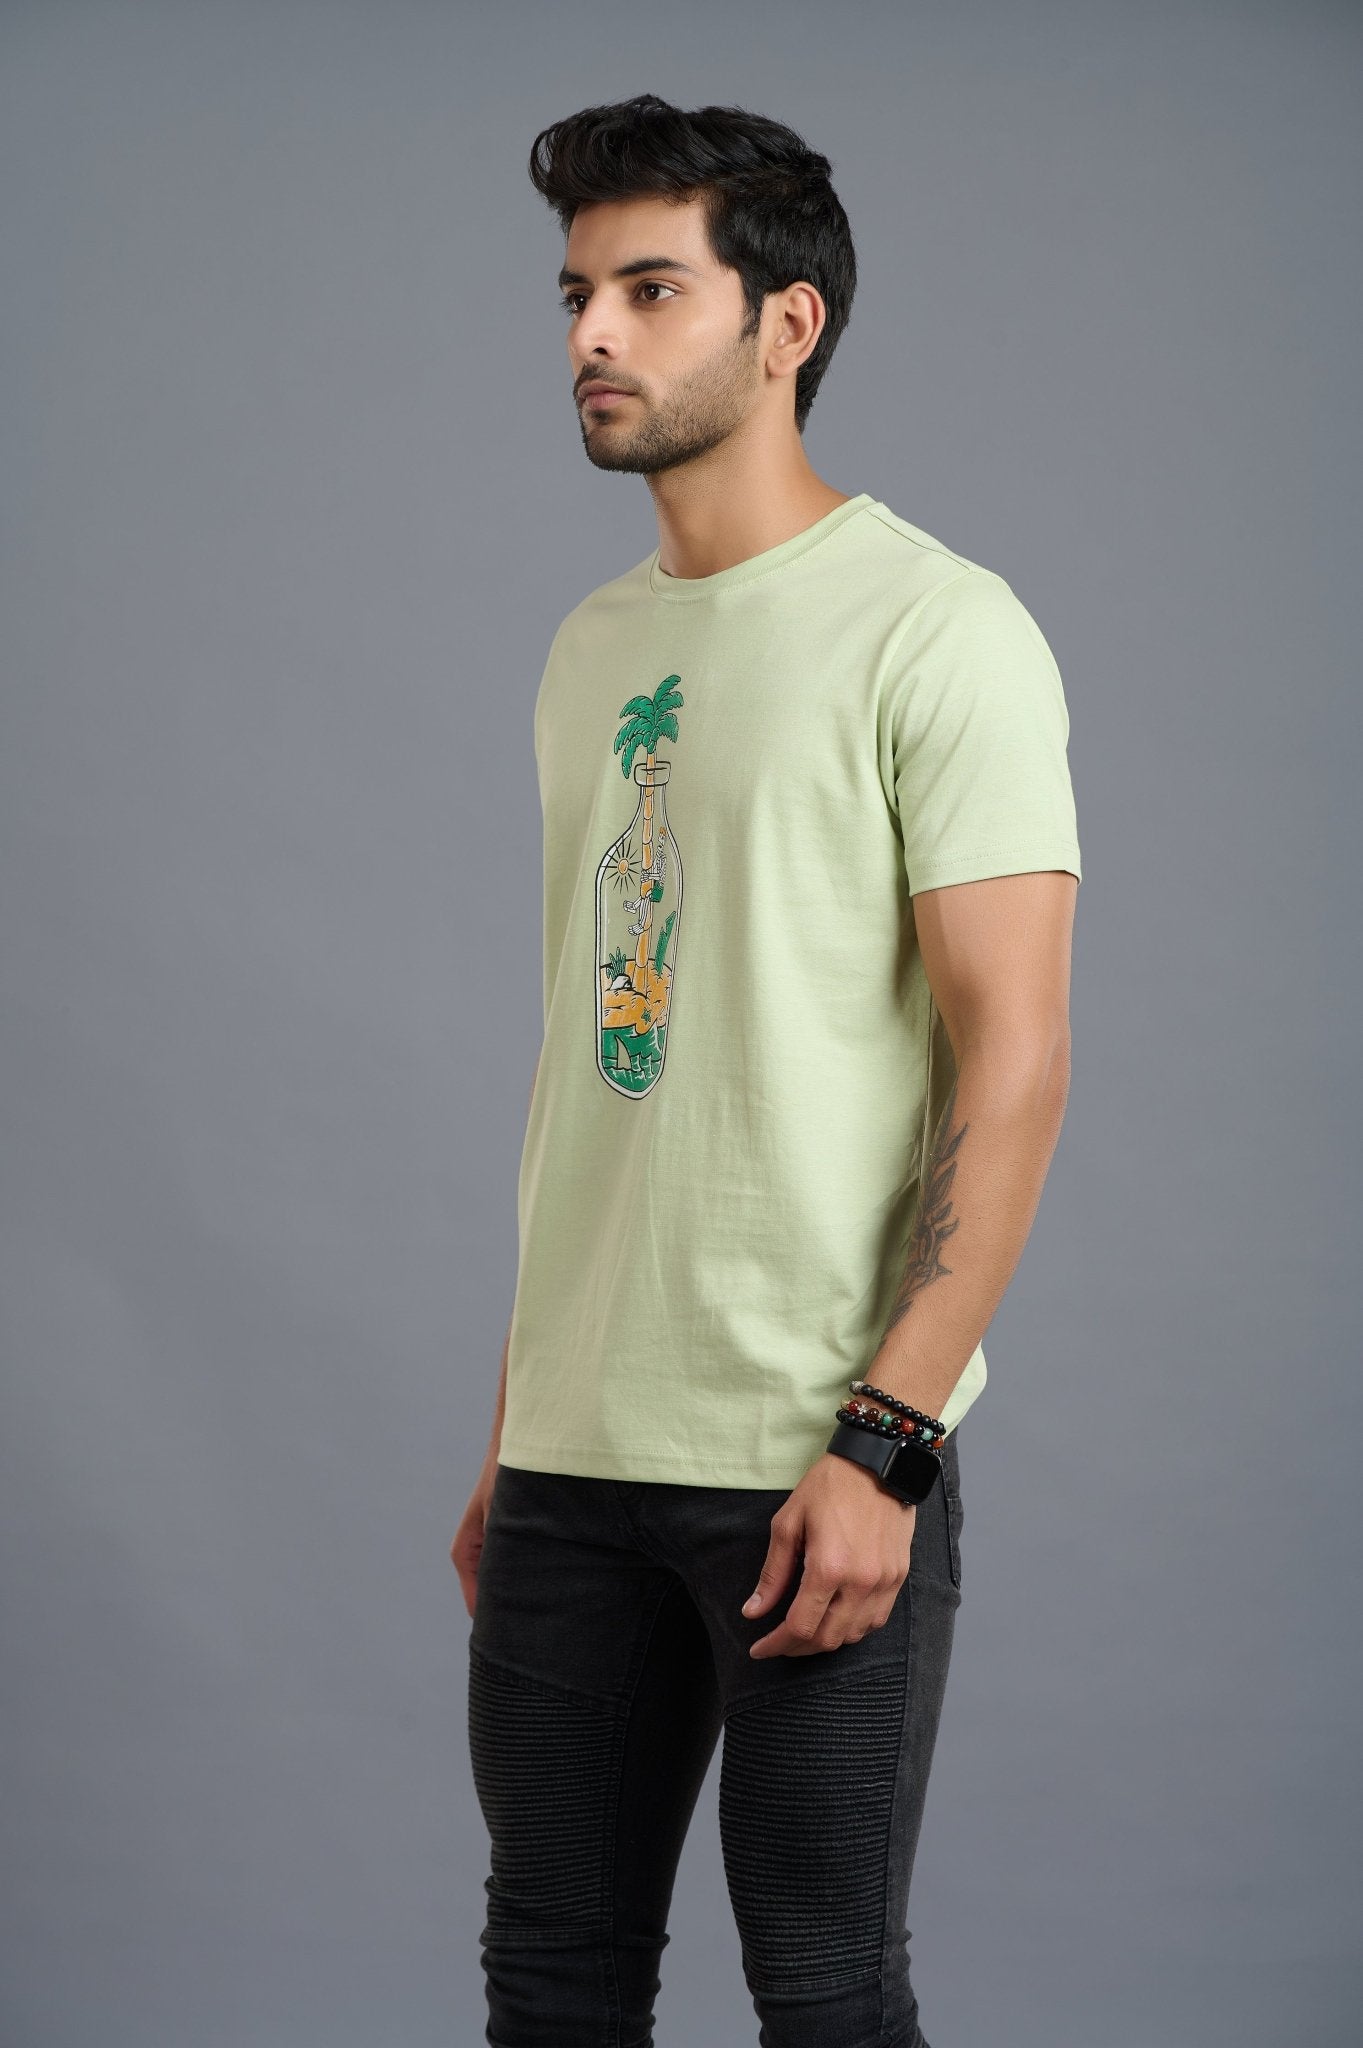 Sea Devil Printed Mint Green T-Shirt for Men - Go Devil